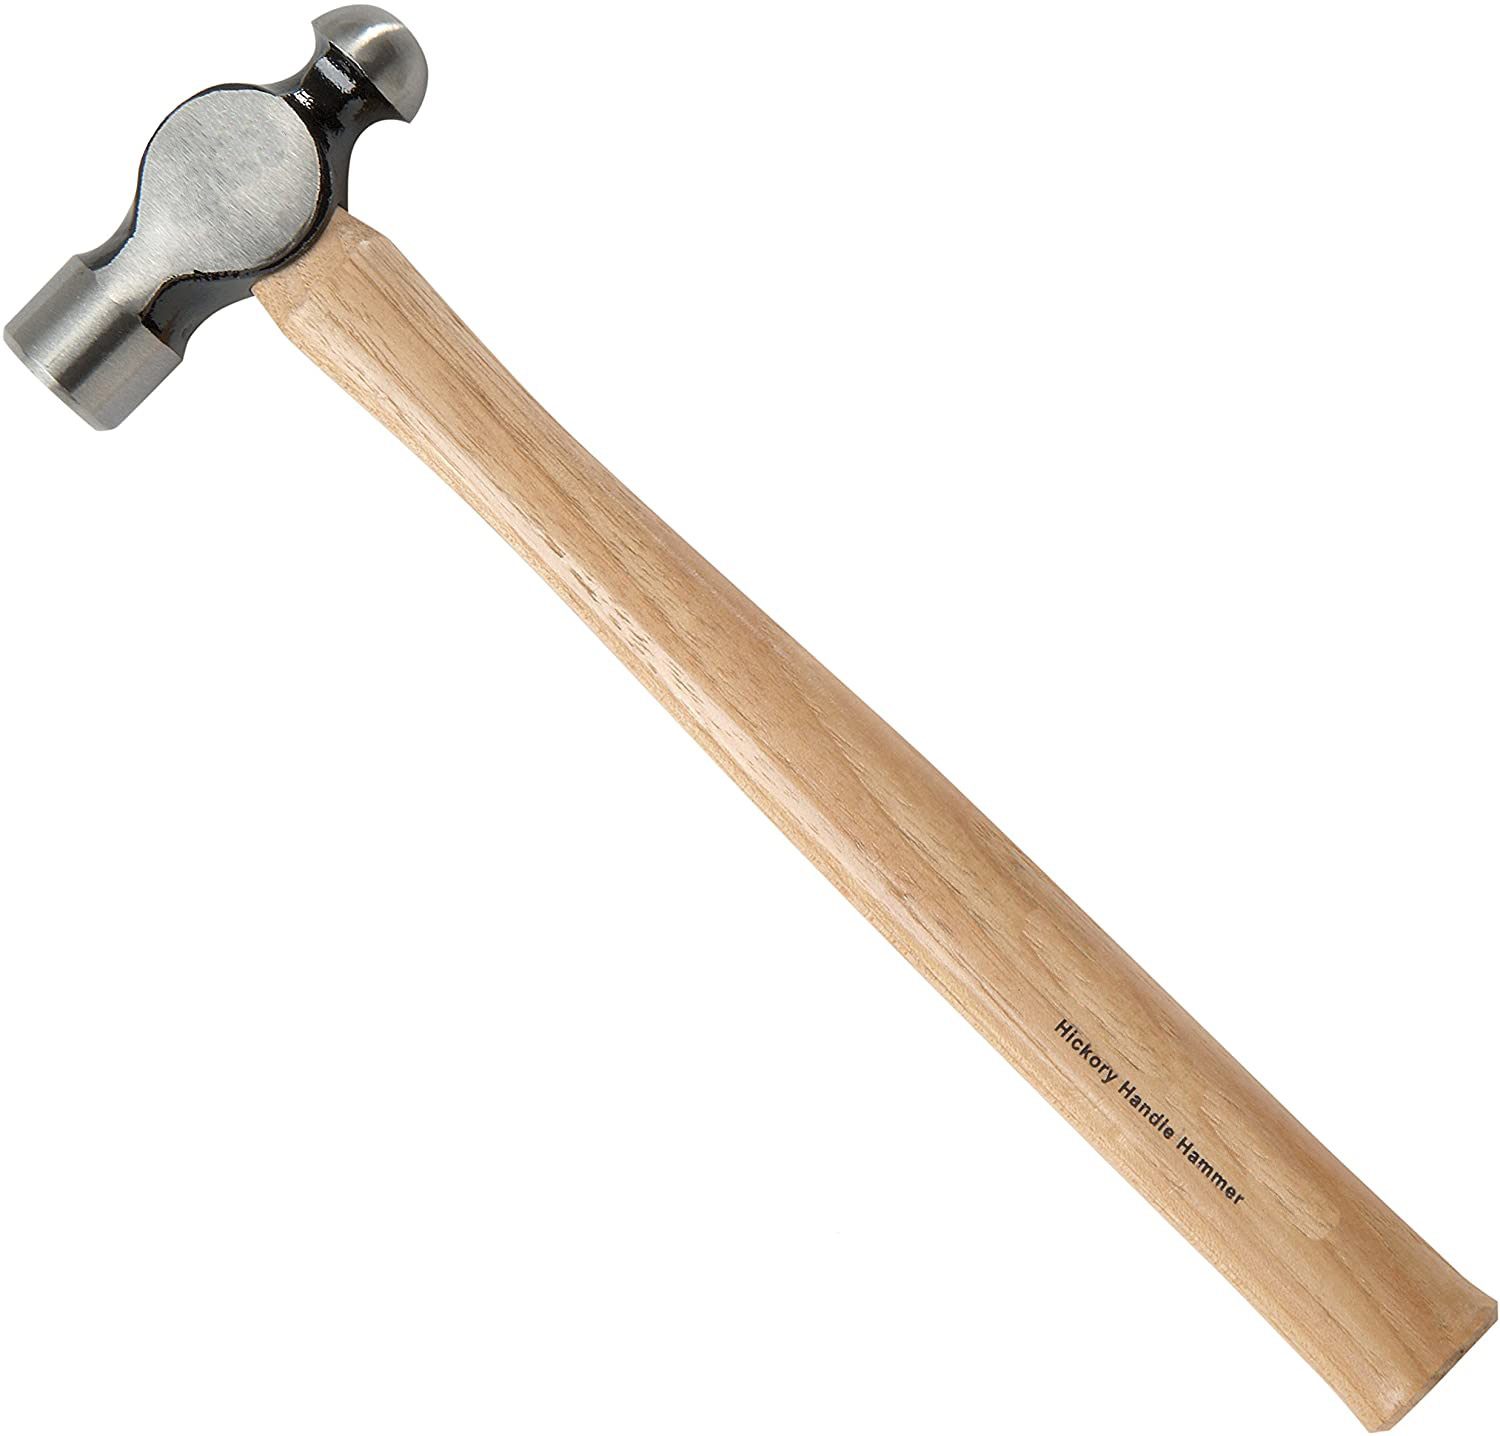 12OZ Ball Peen Hammer with wood handle